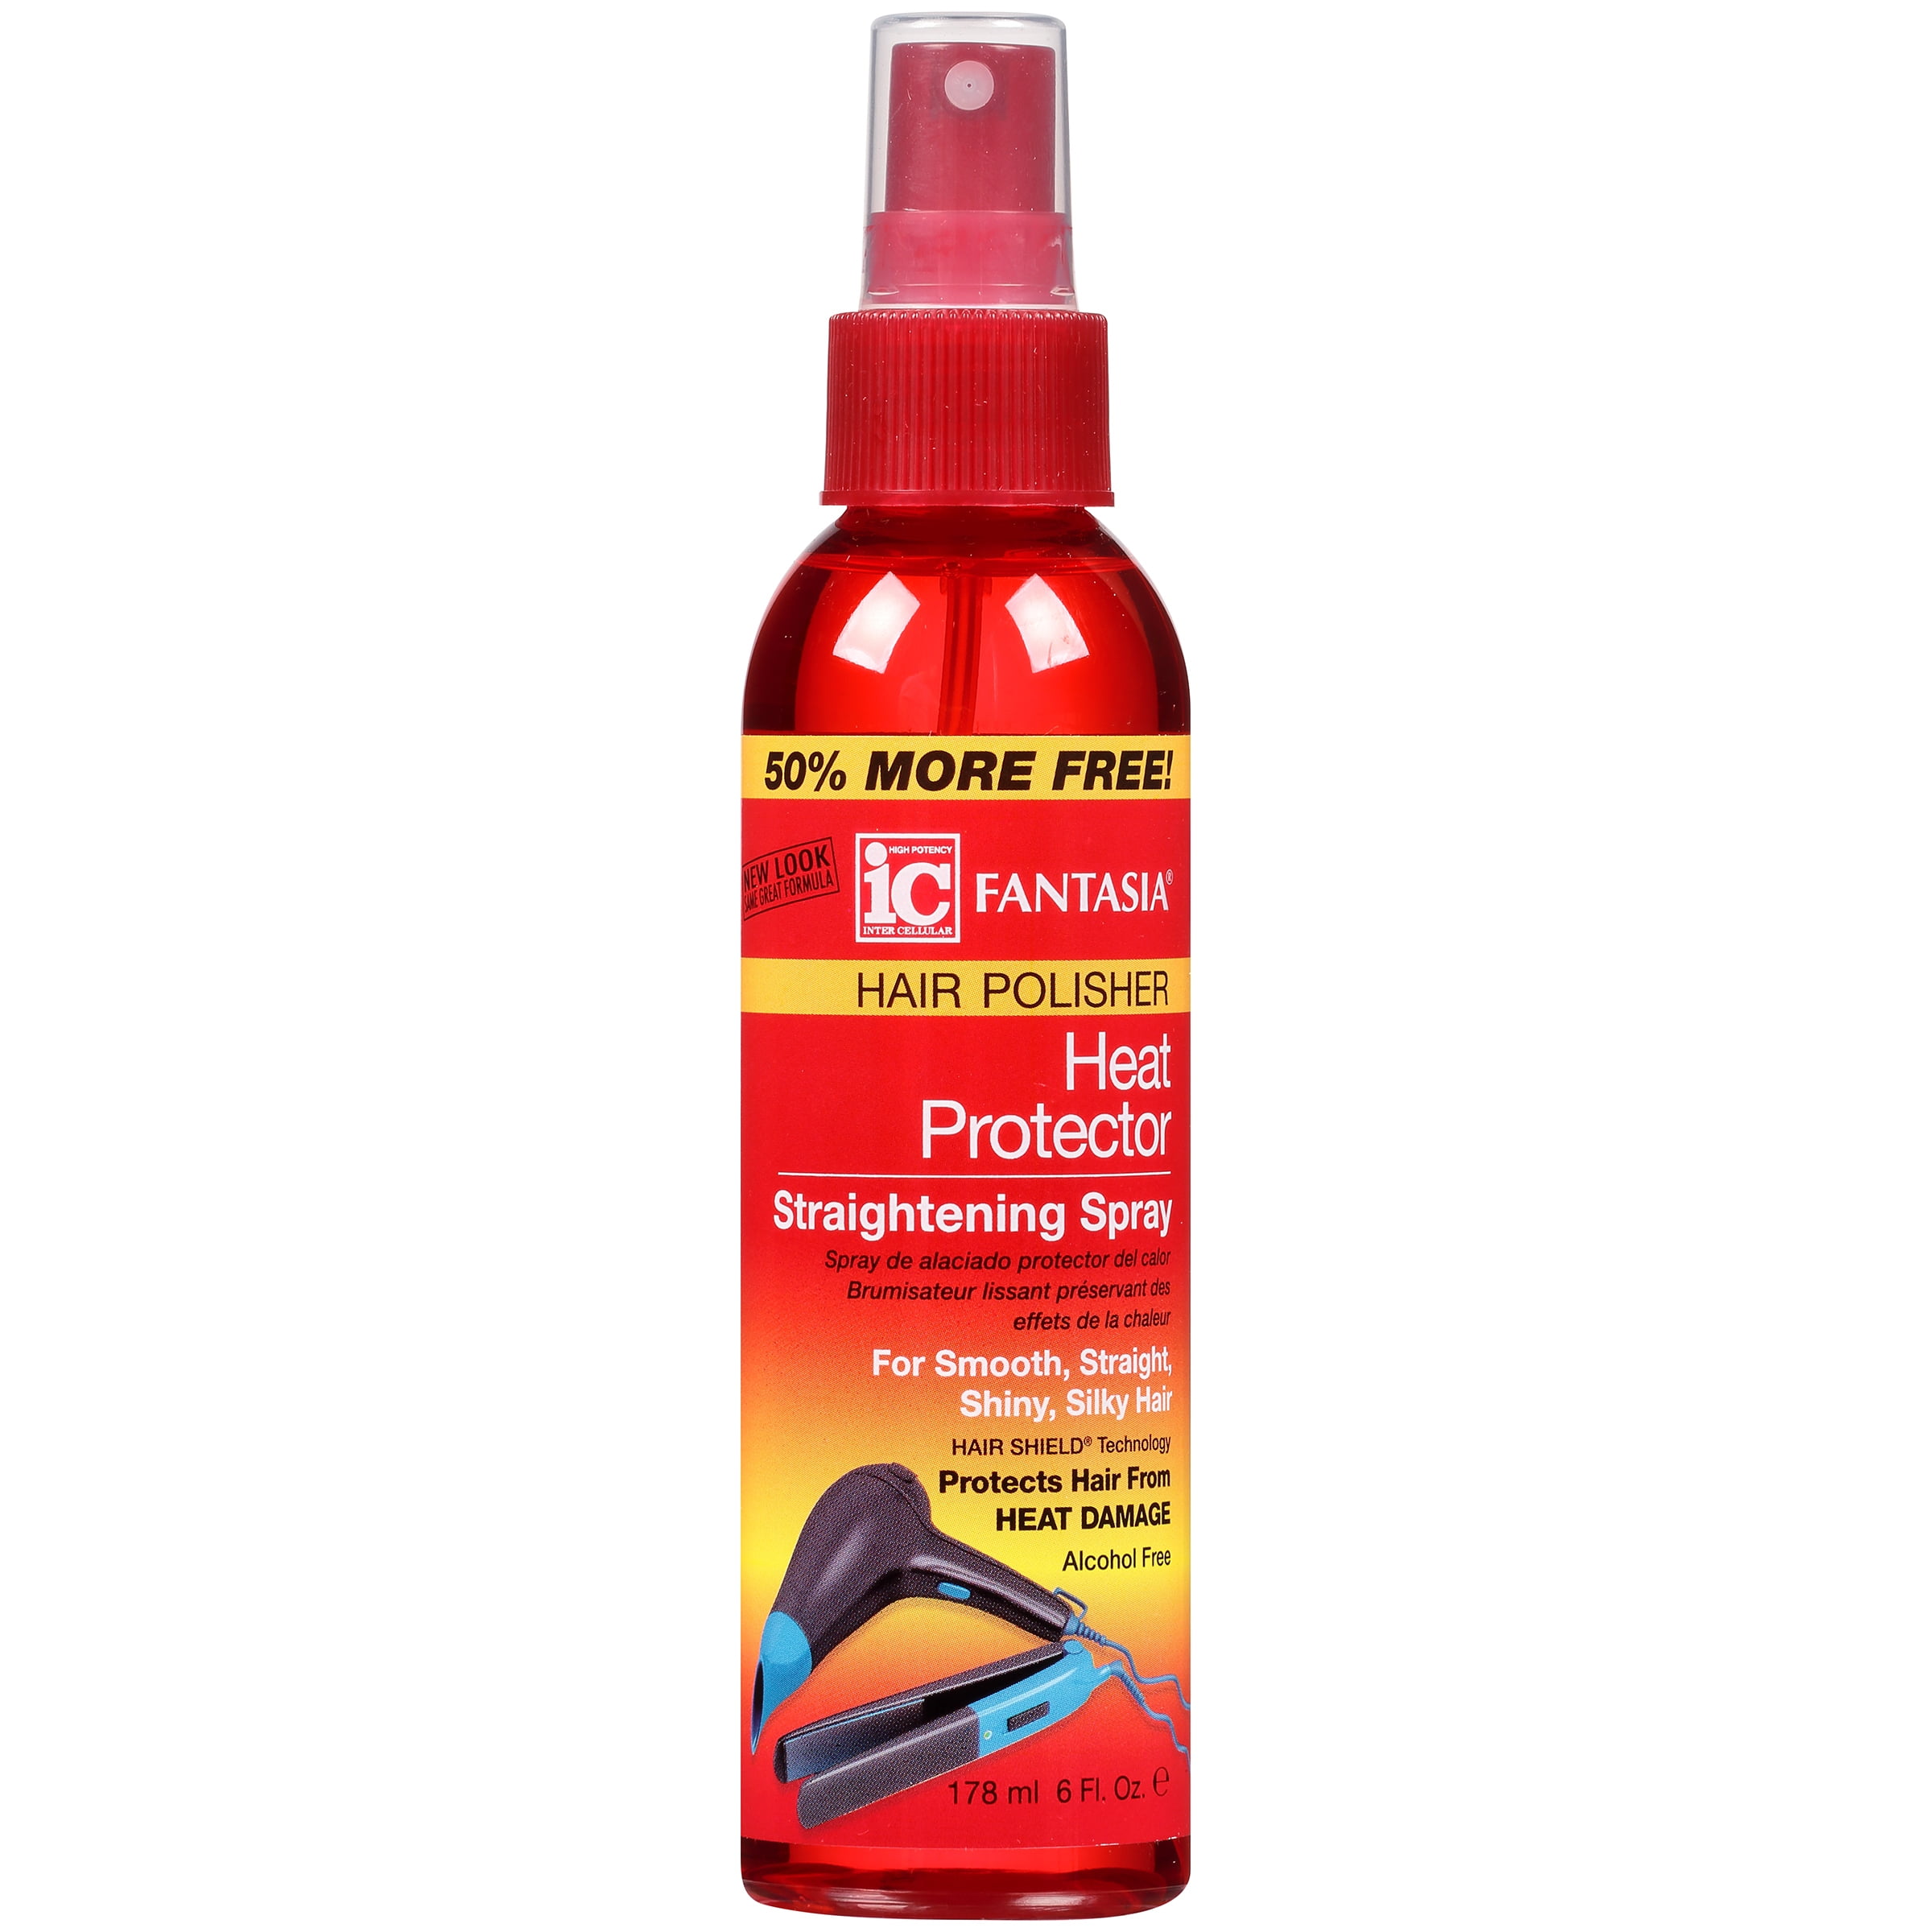 Fantasia High Potency IC Moisturizing Straightening Heat Protectant Hair Polisher Spray with Aloe & Vitamin E, 6 fl oz